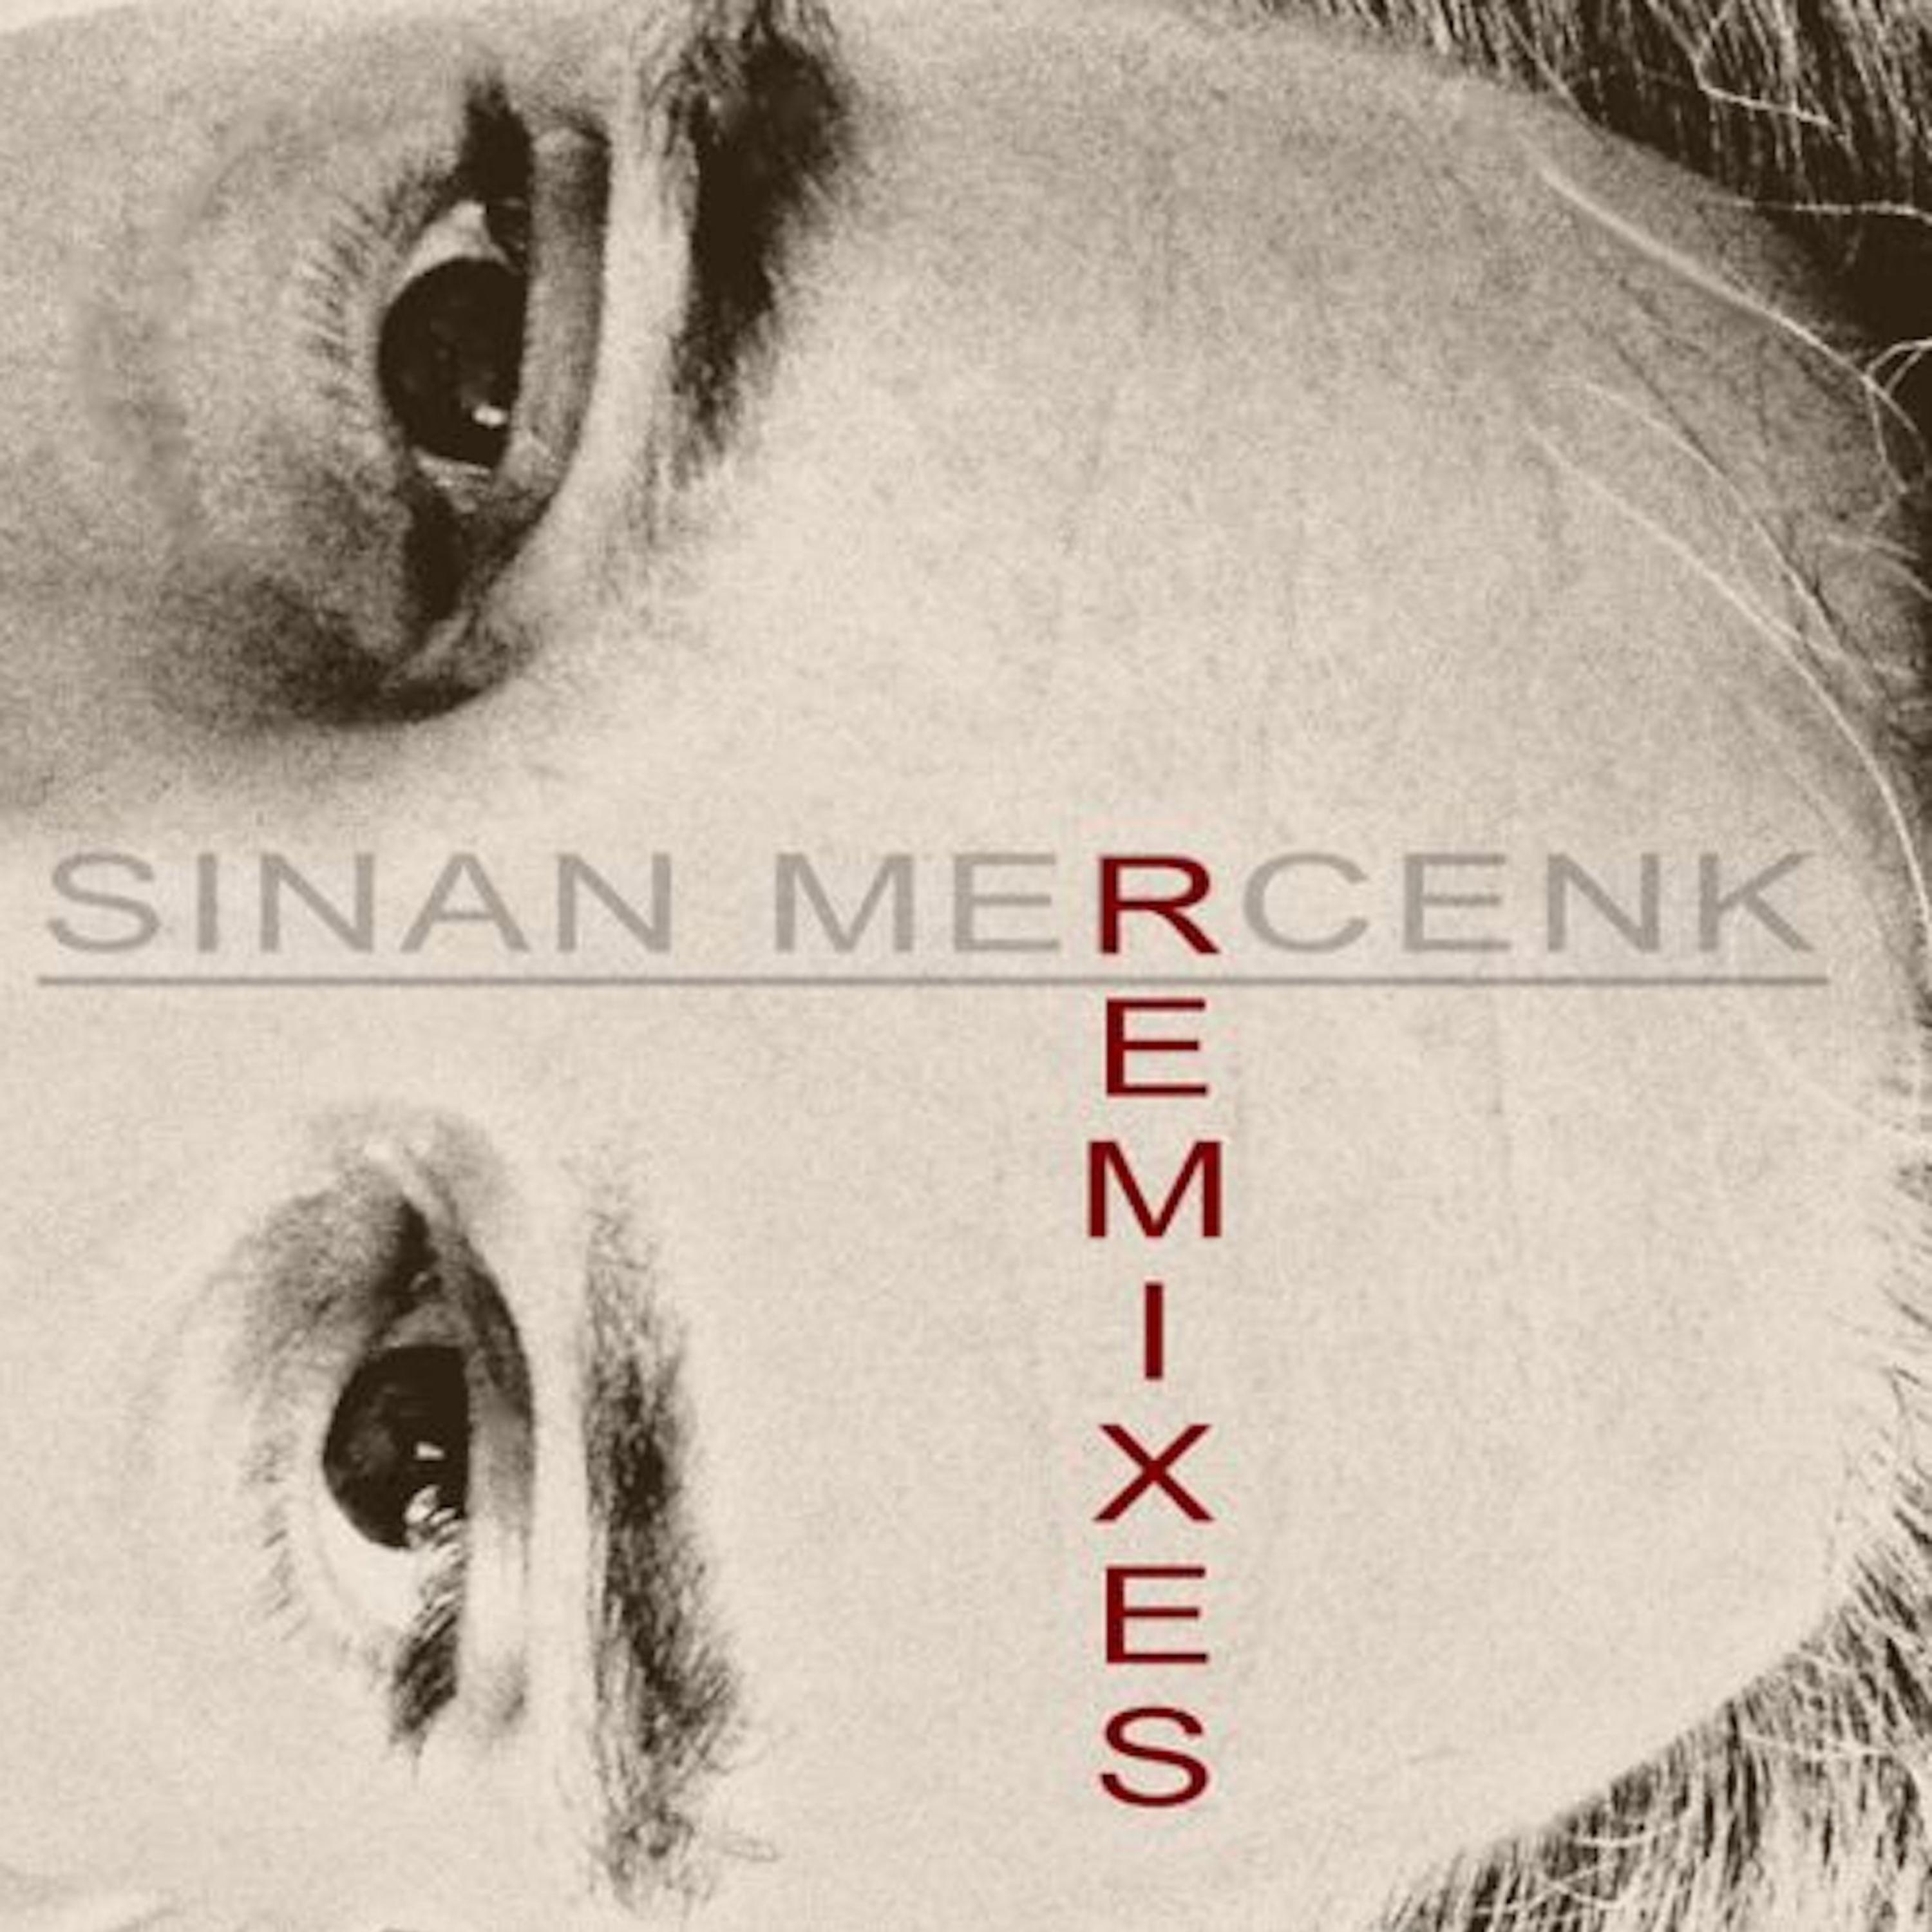 Lovely (Sinan Mercenk's Remix)